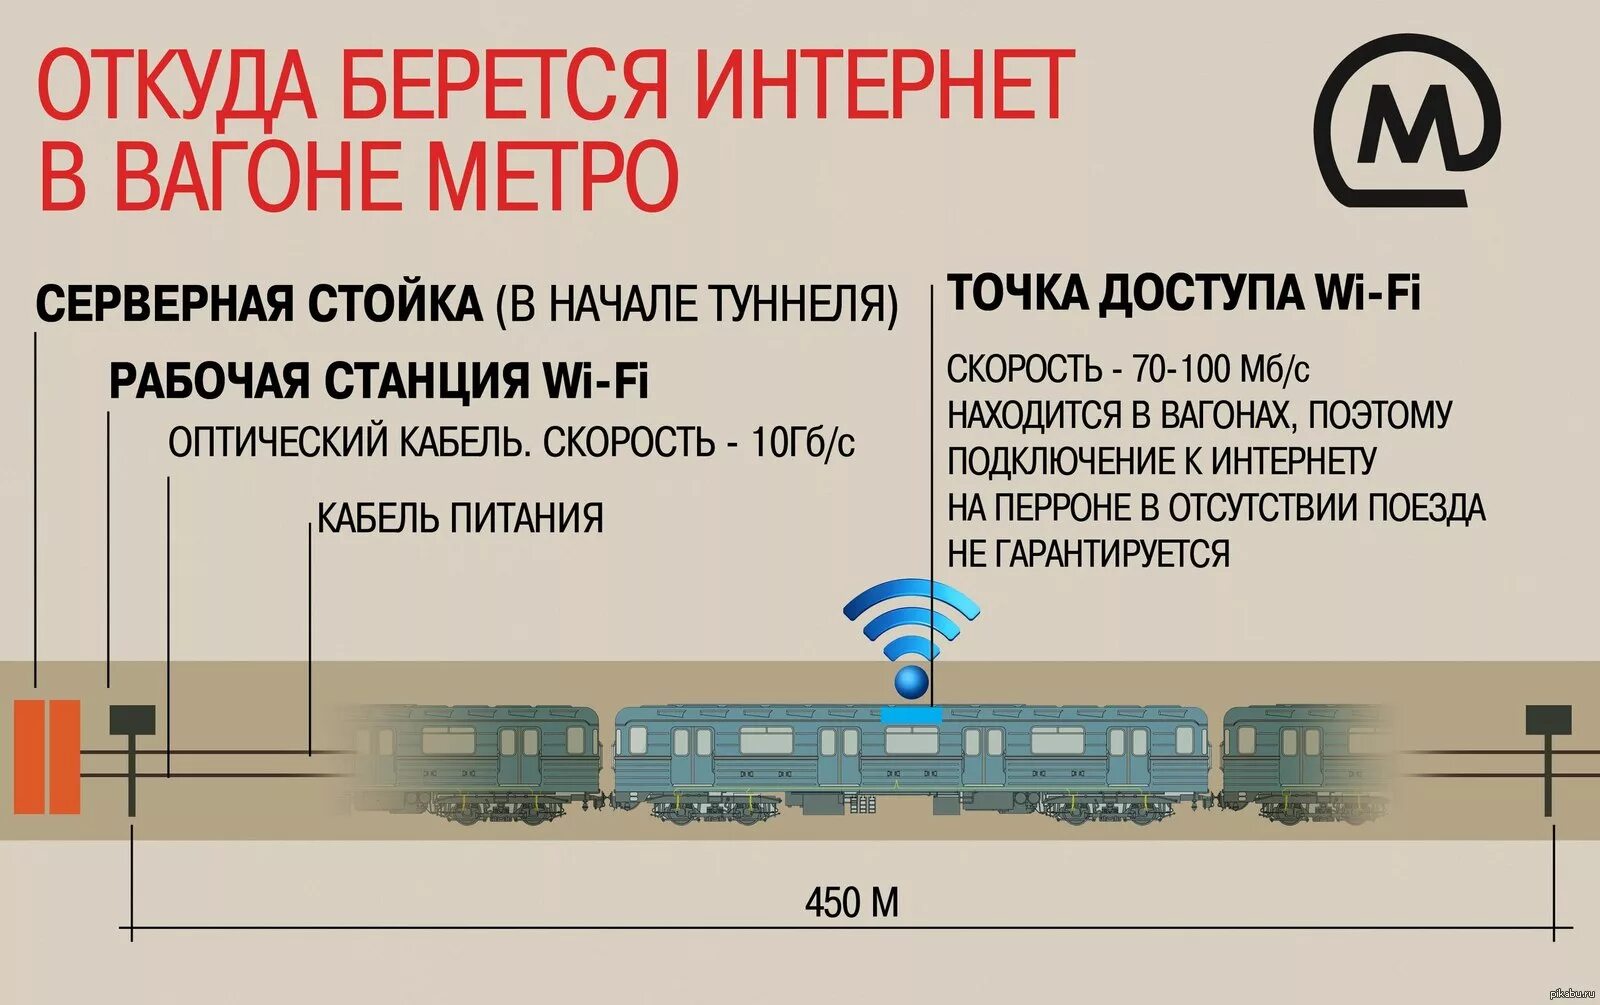 Откуда идет интернет. Интернет в метро. Wi-Fi в метро. Инфографика вагон метро. Инфографика вагон Московского метро.